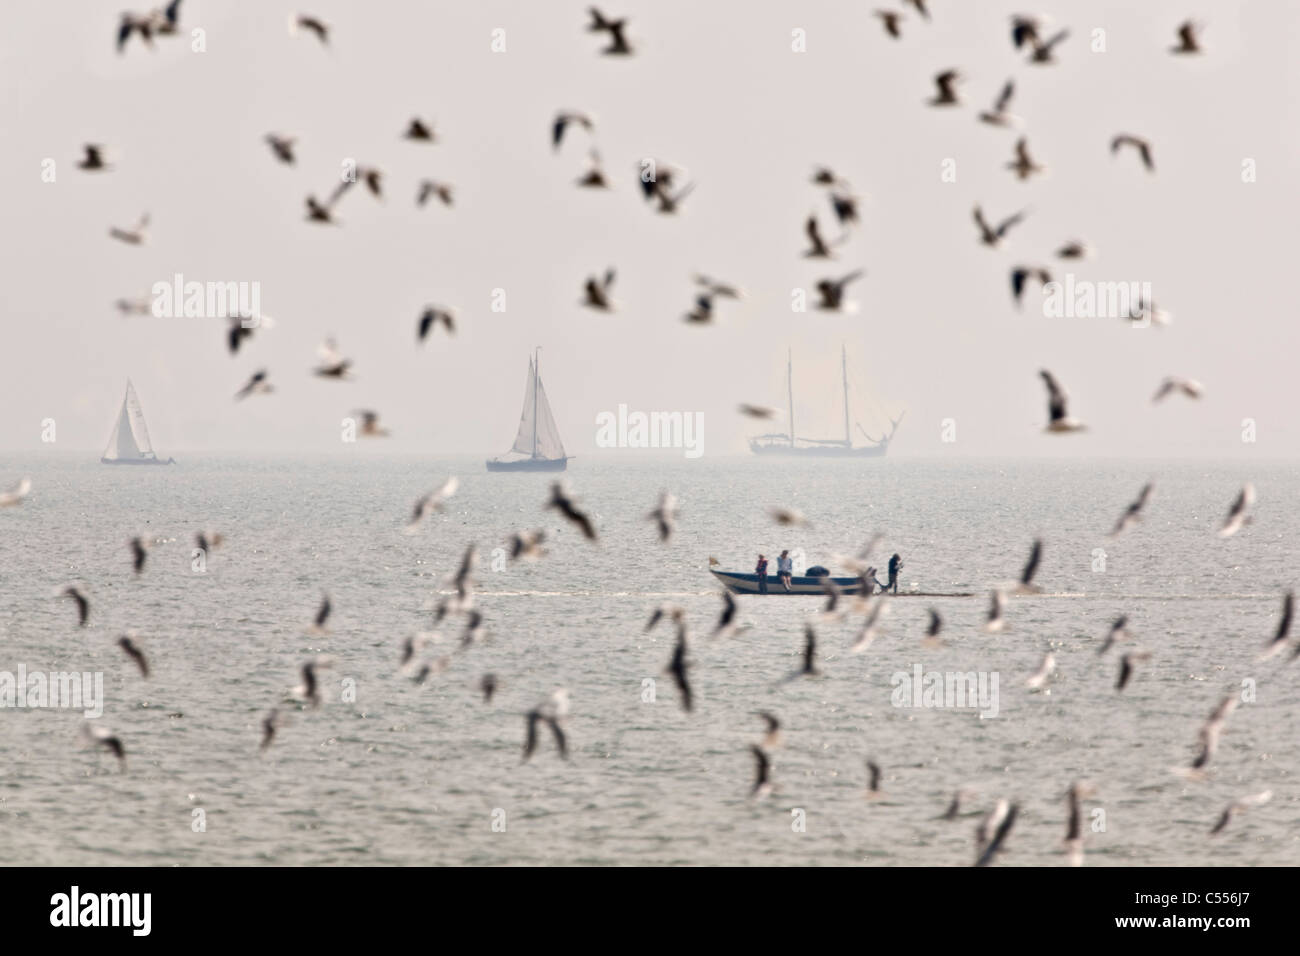 The Netherlands, Hollum, Ameland Island, belonging to Wadden Sea Islands. Sailing boats and birds flying. Stock Photo